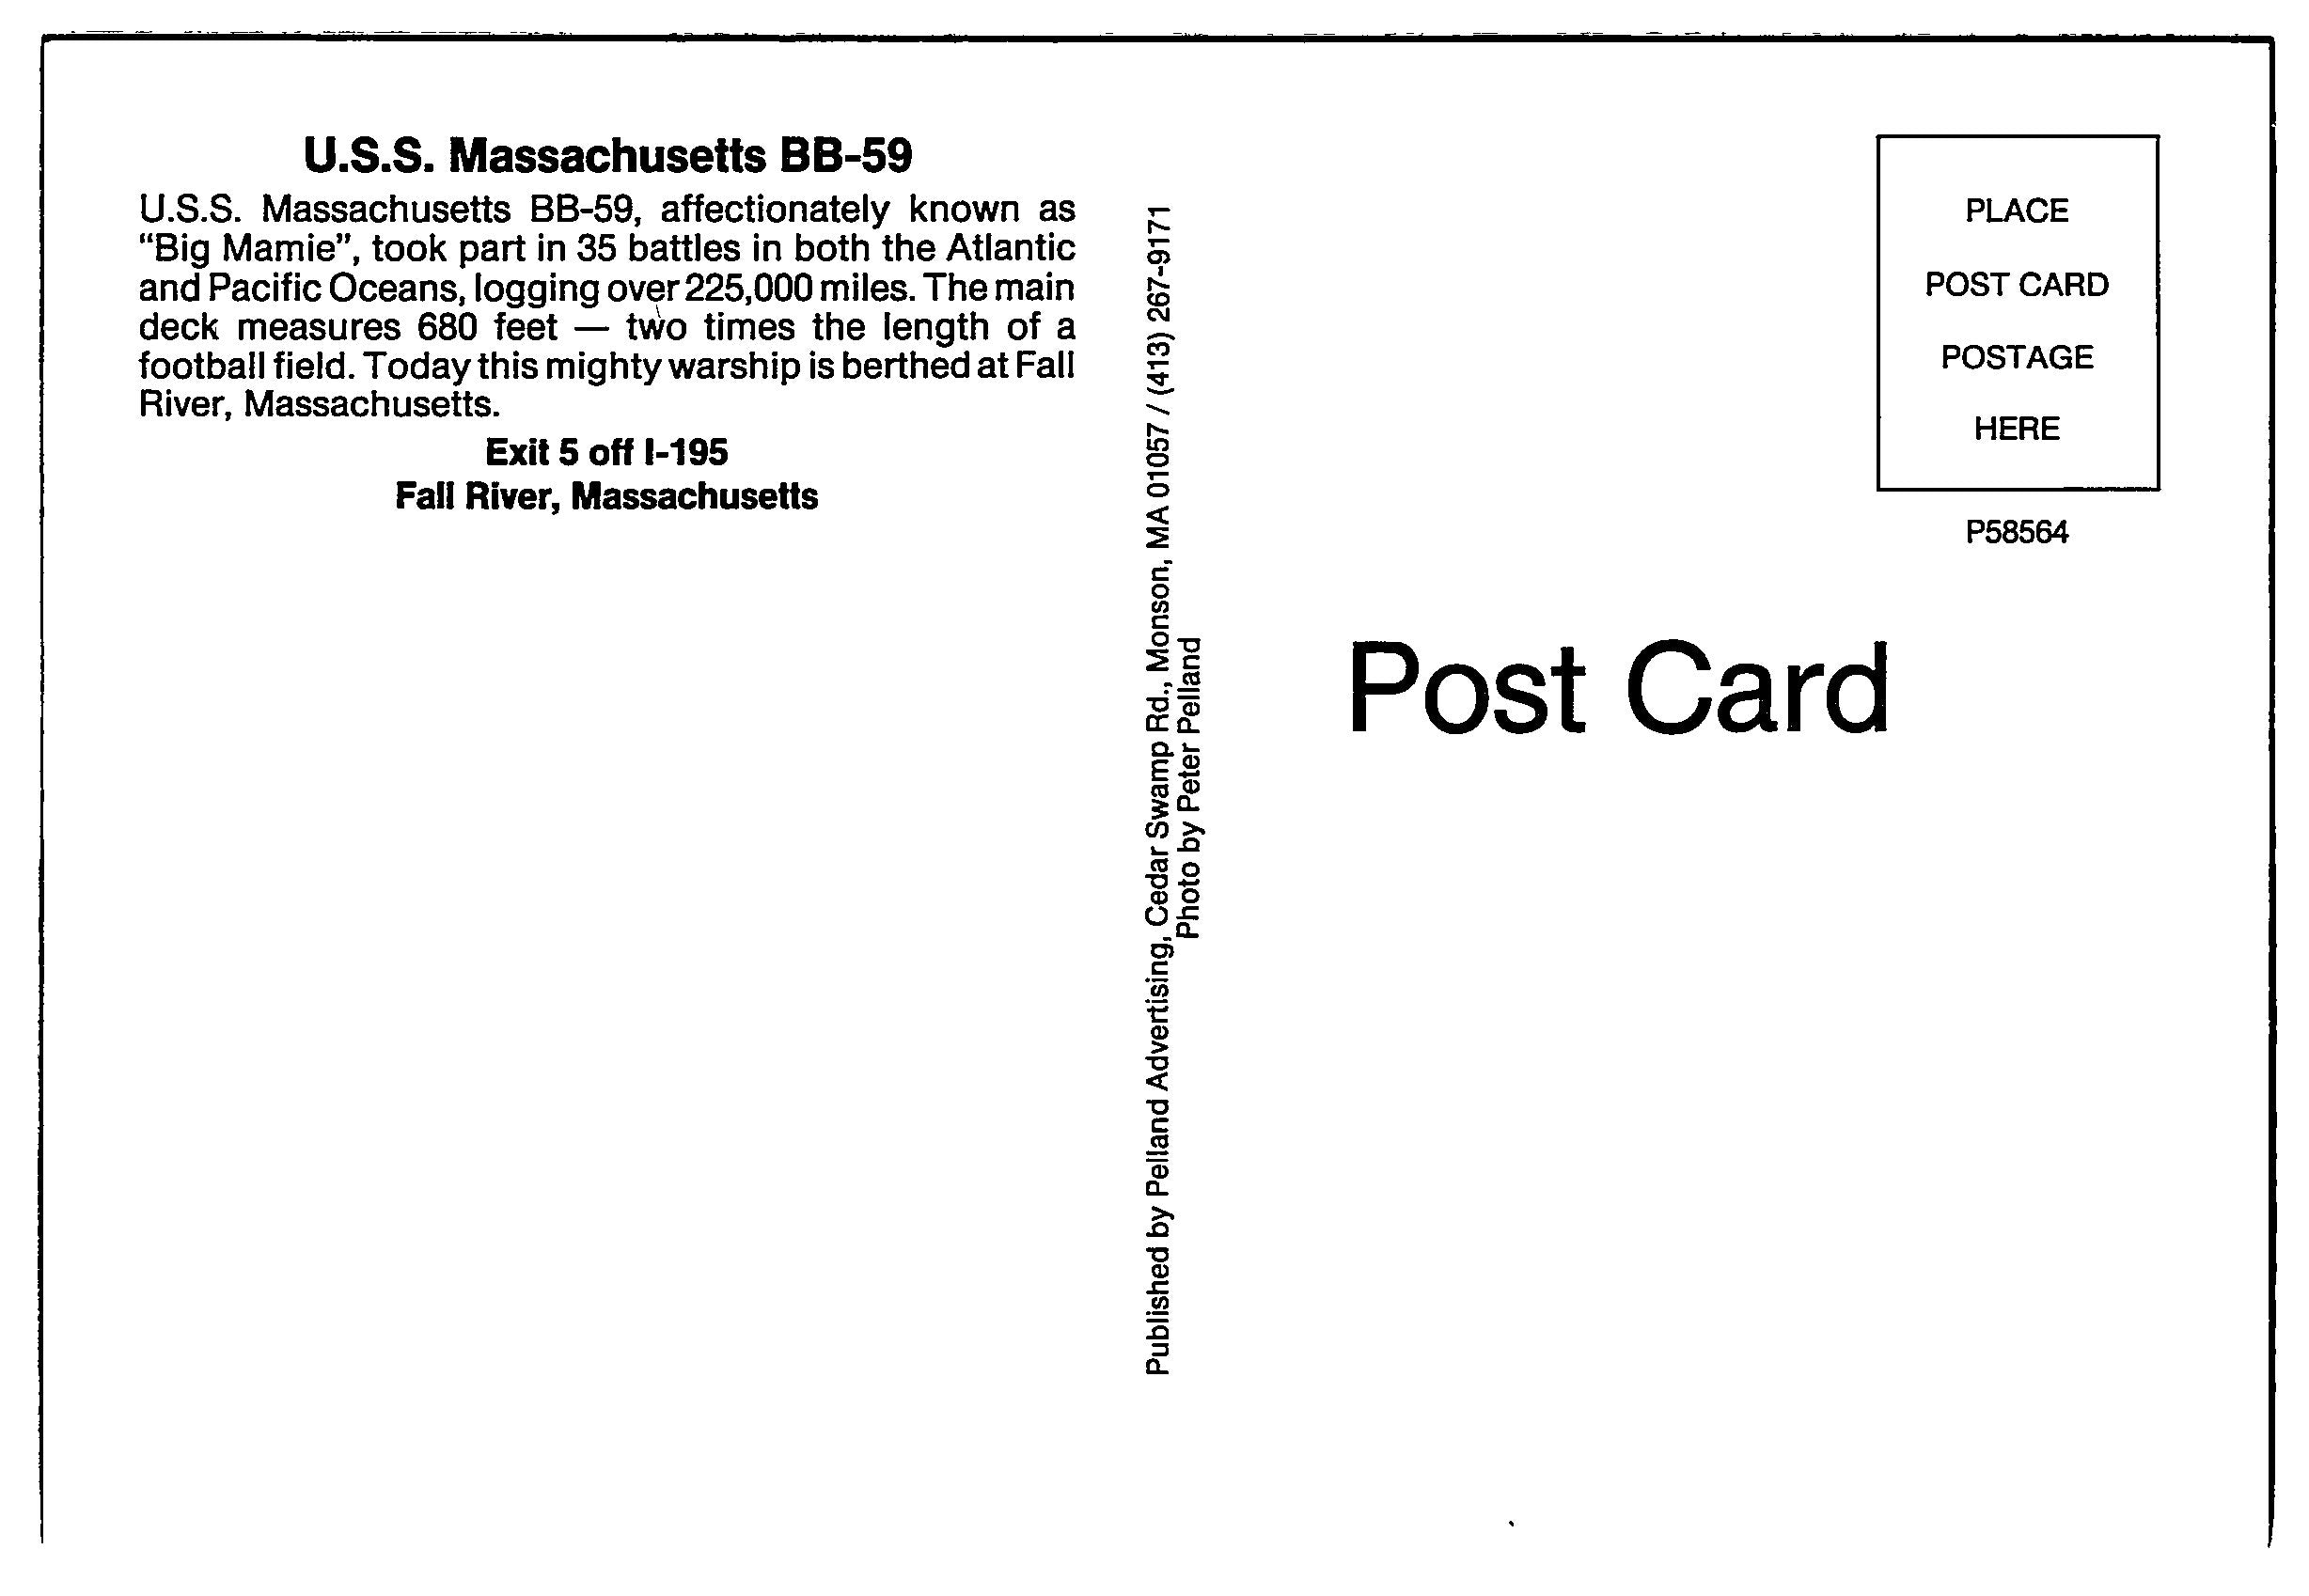 U.S.S. Massachusetts BB-59, Vintage Post Card